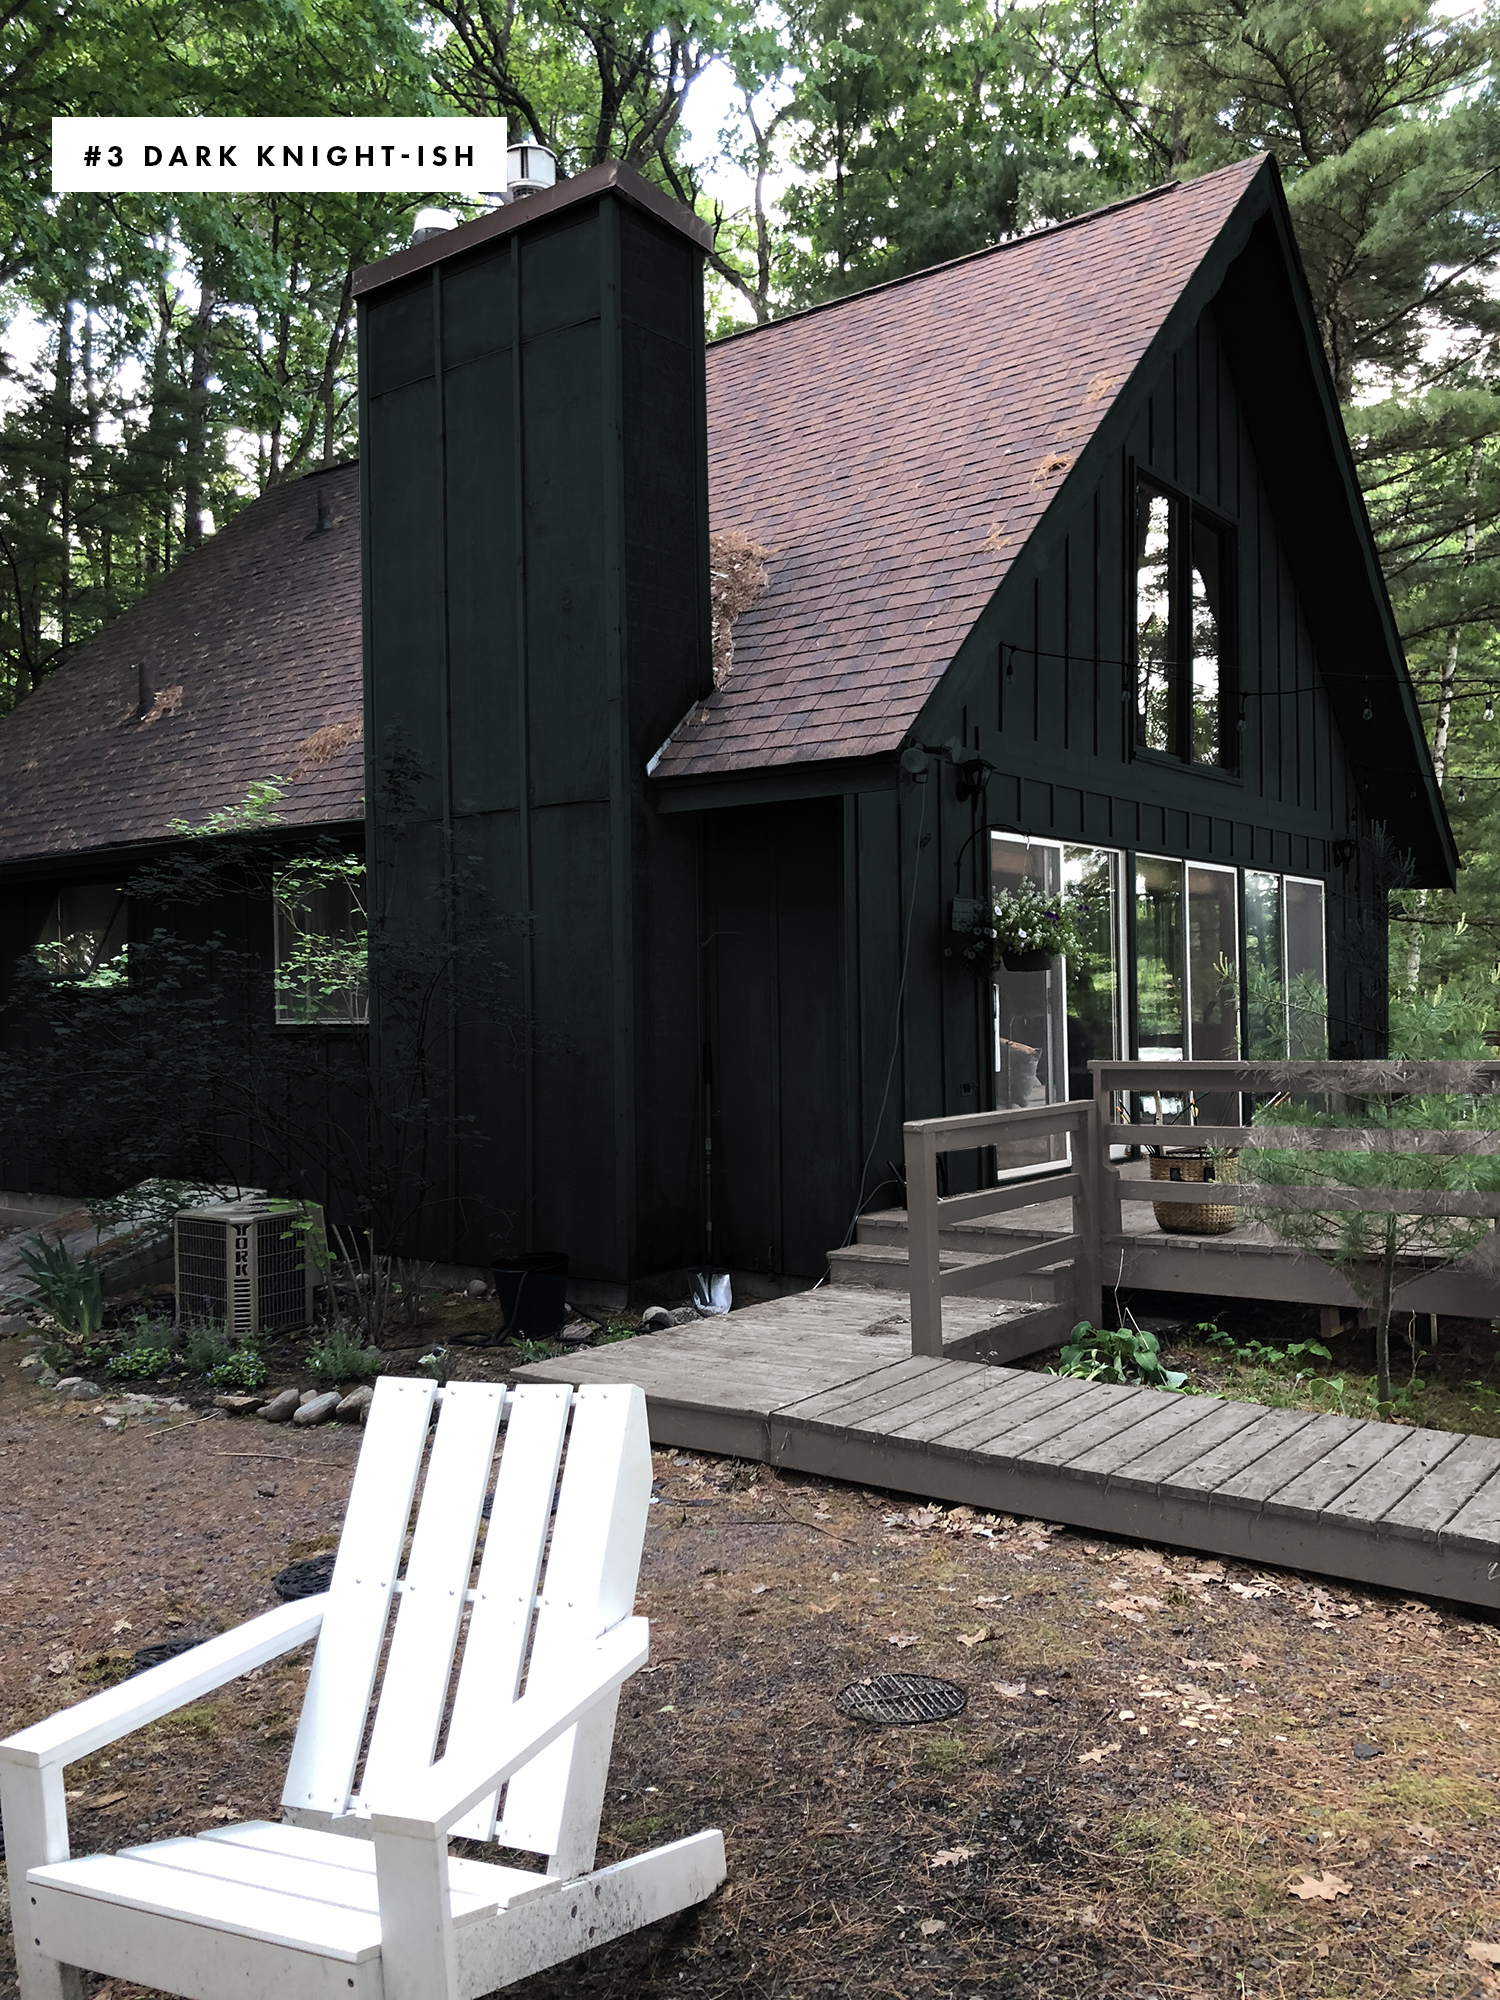 Paint the Cabin Dark Green | Deuce Cities Henhouse